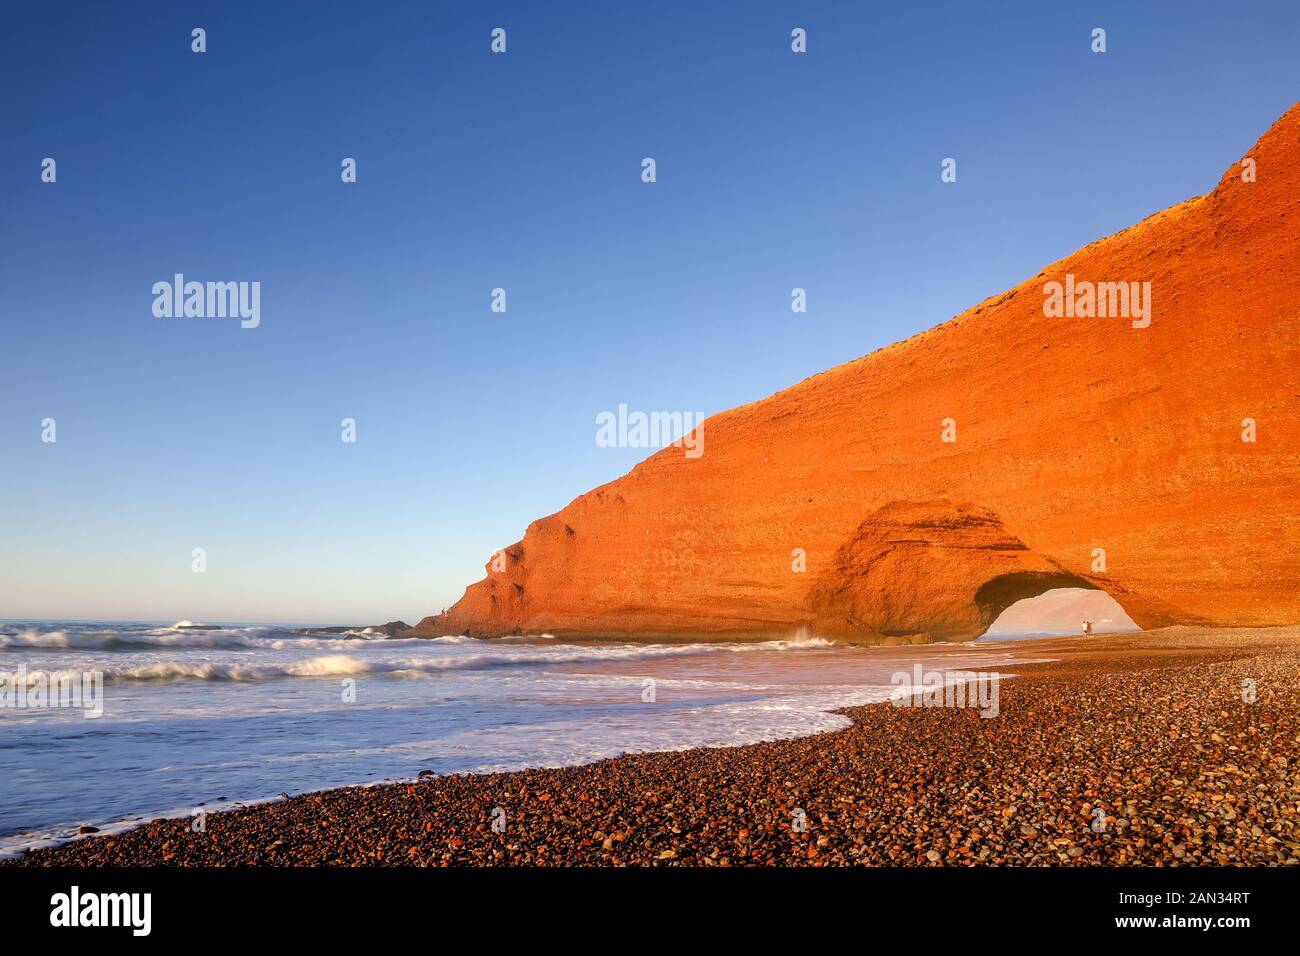 Natural stone arch at legzira beach with beautiful red colors, Sidi Ifni, Morocco Stock Photo